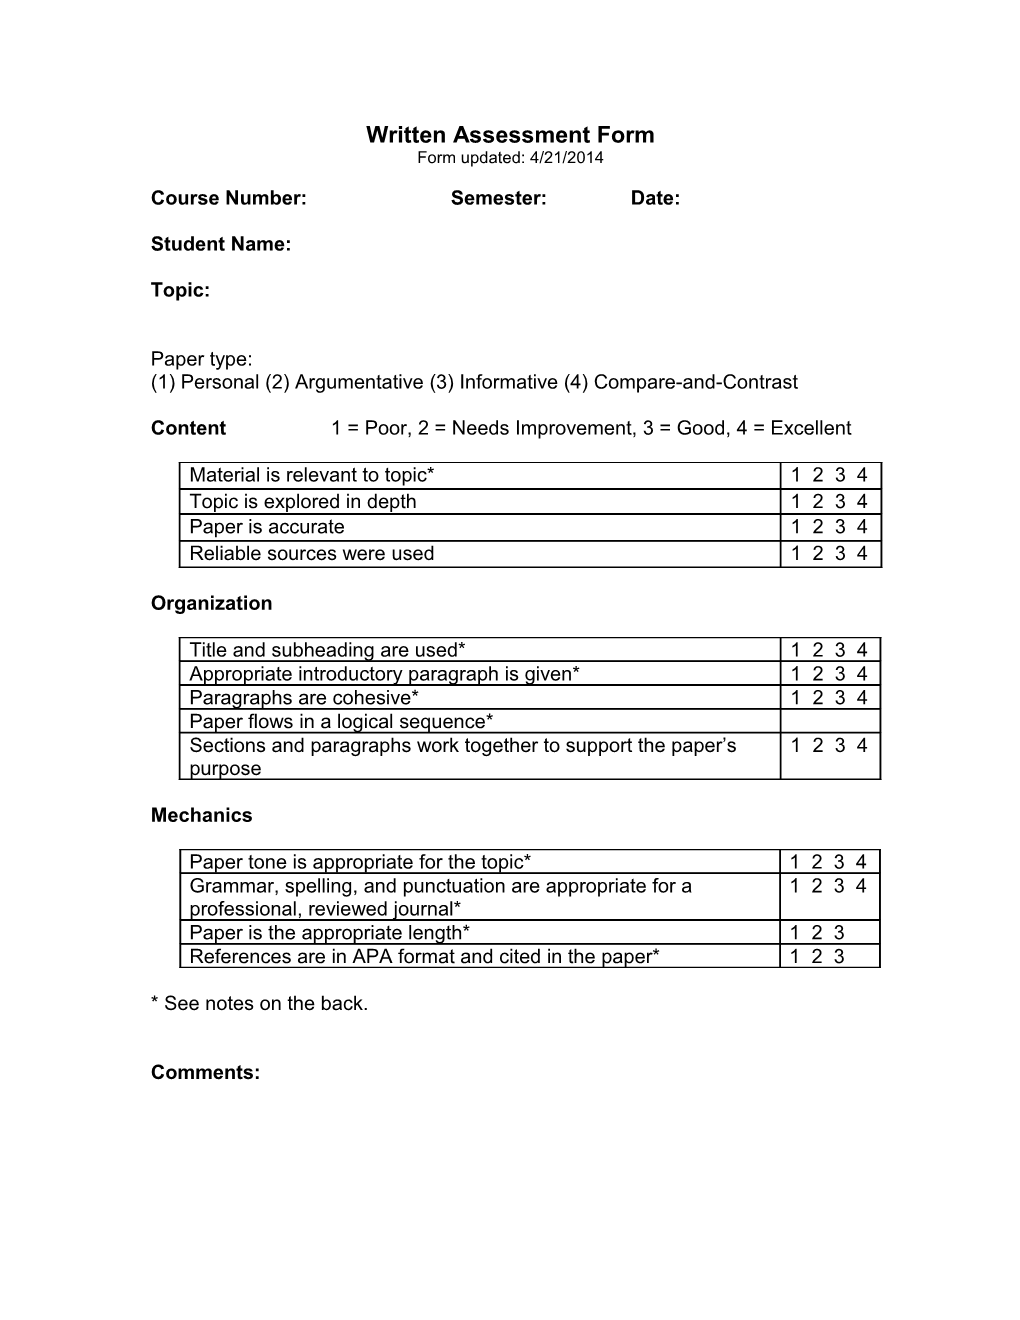 Standardized Written Assessment Form